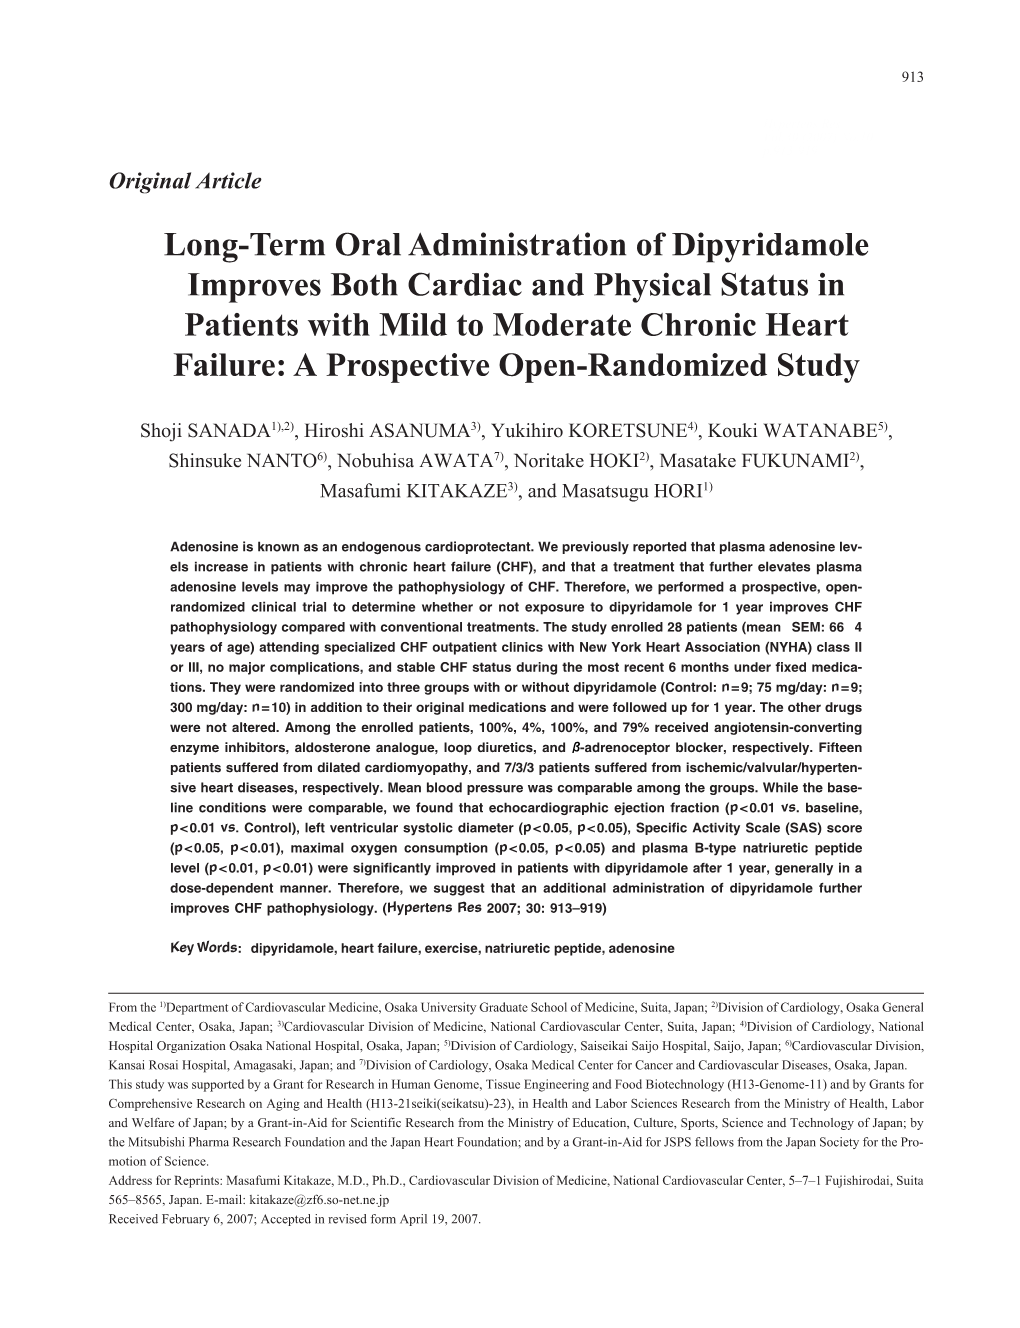 Long-Term Oral Administration of Dipyridamole Improves Both